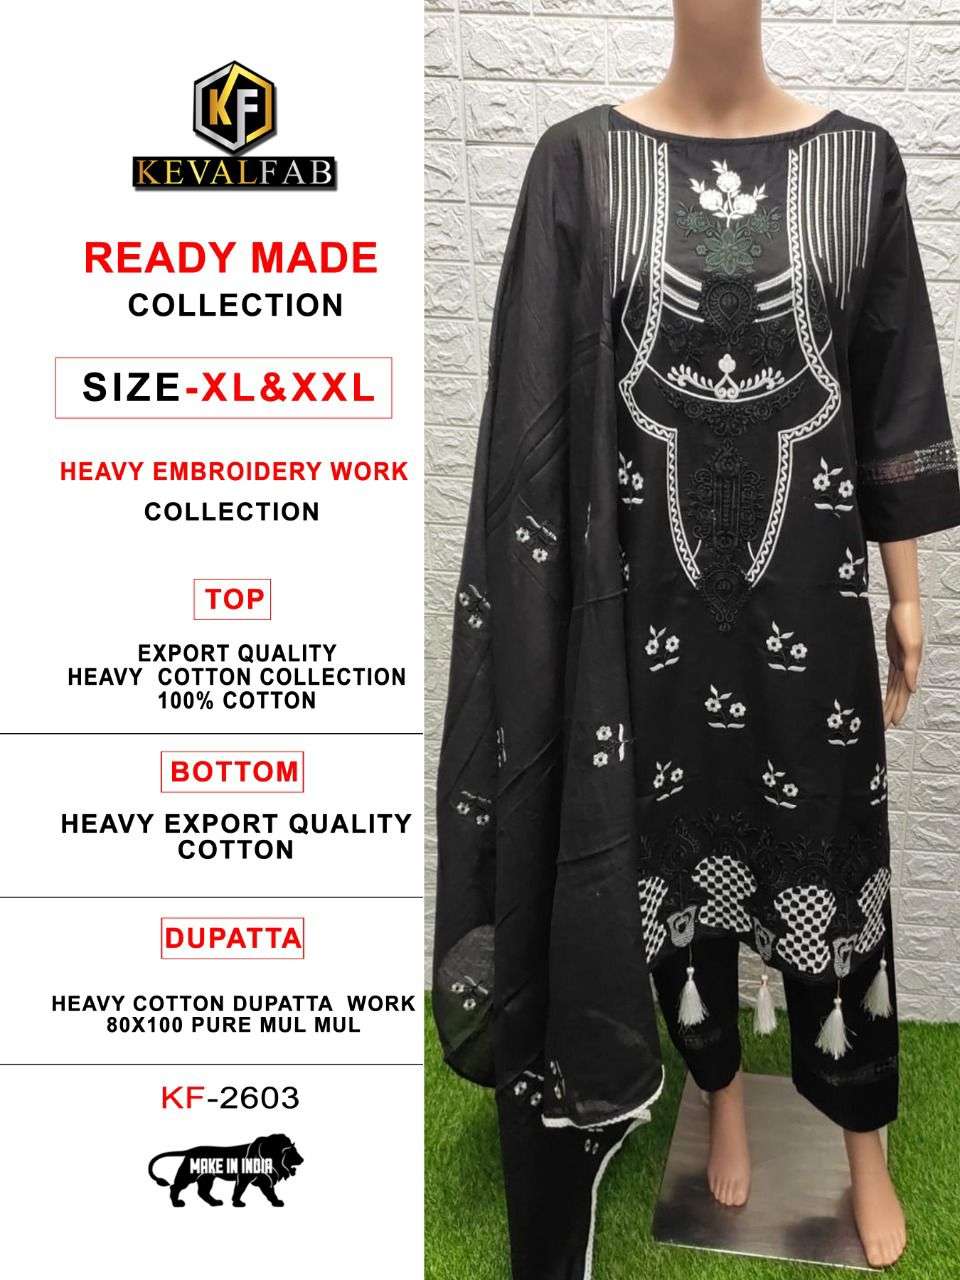 Keval fab Readymade pakistani Cotton Suit Catalog Supplier